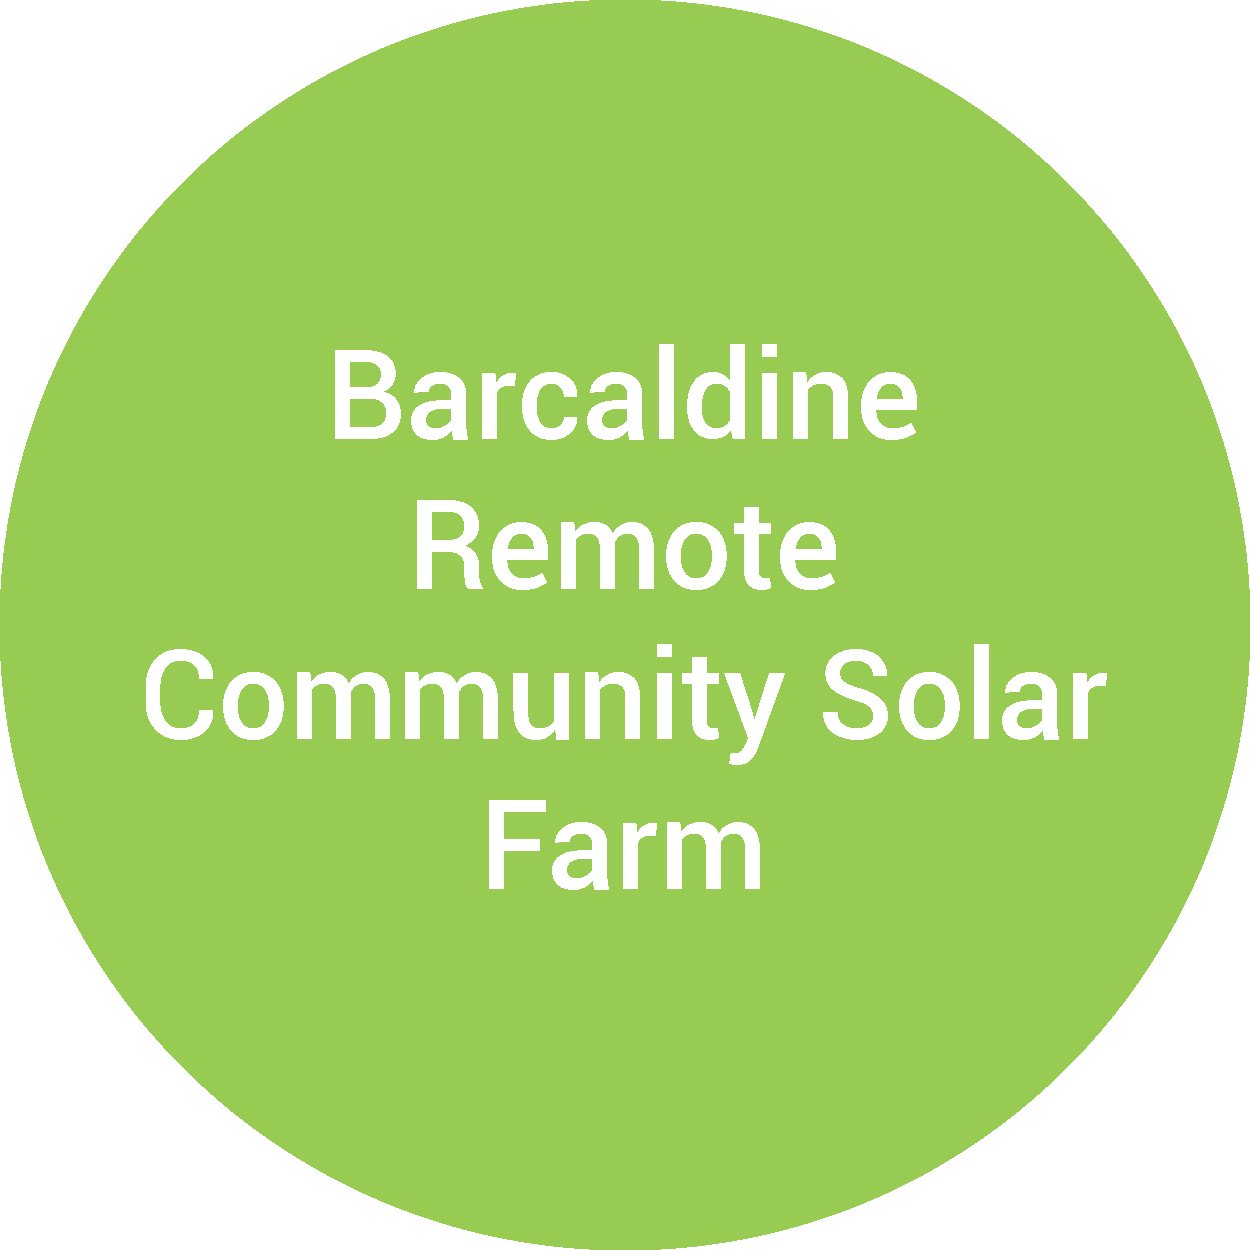 Barcaldine Remote Community Solar Farm